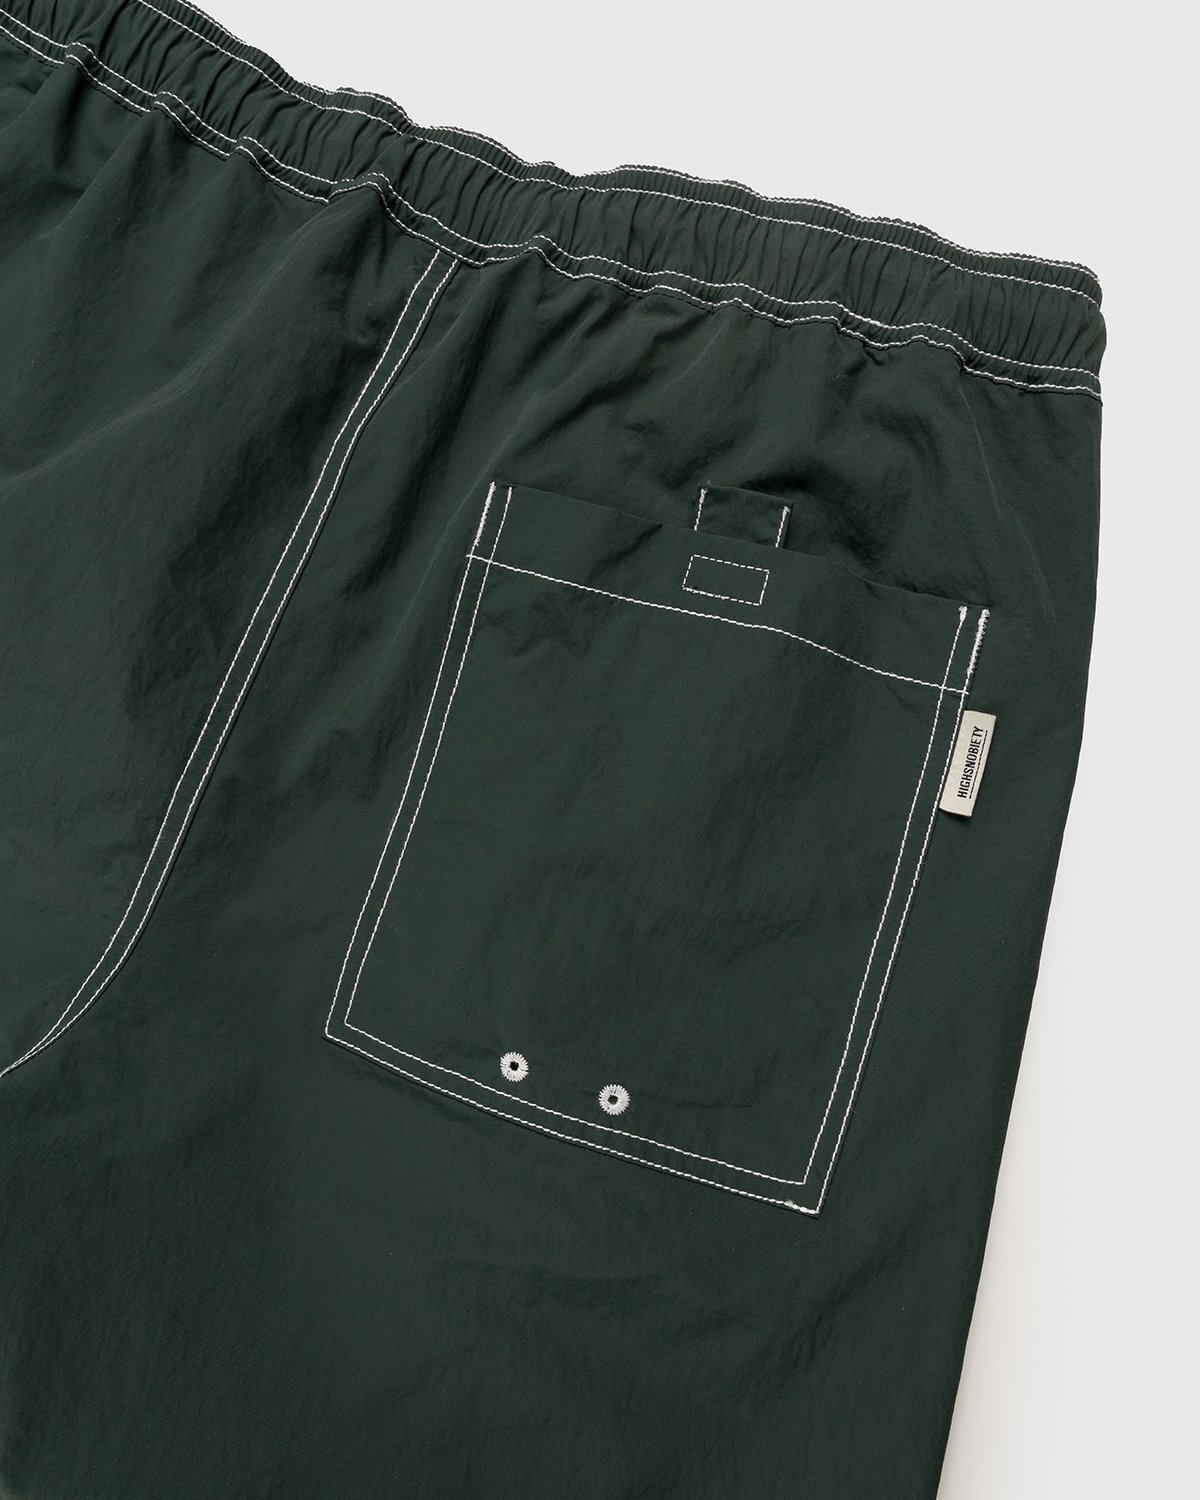 Highsnobiety - Contrast Brushed Nylon Elastic Pants Green - Clothing - Green - Image 3